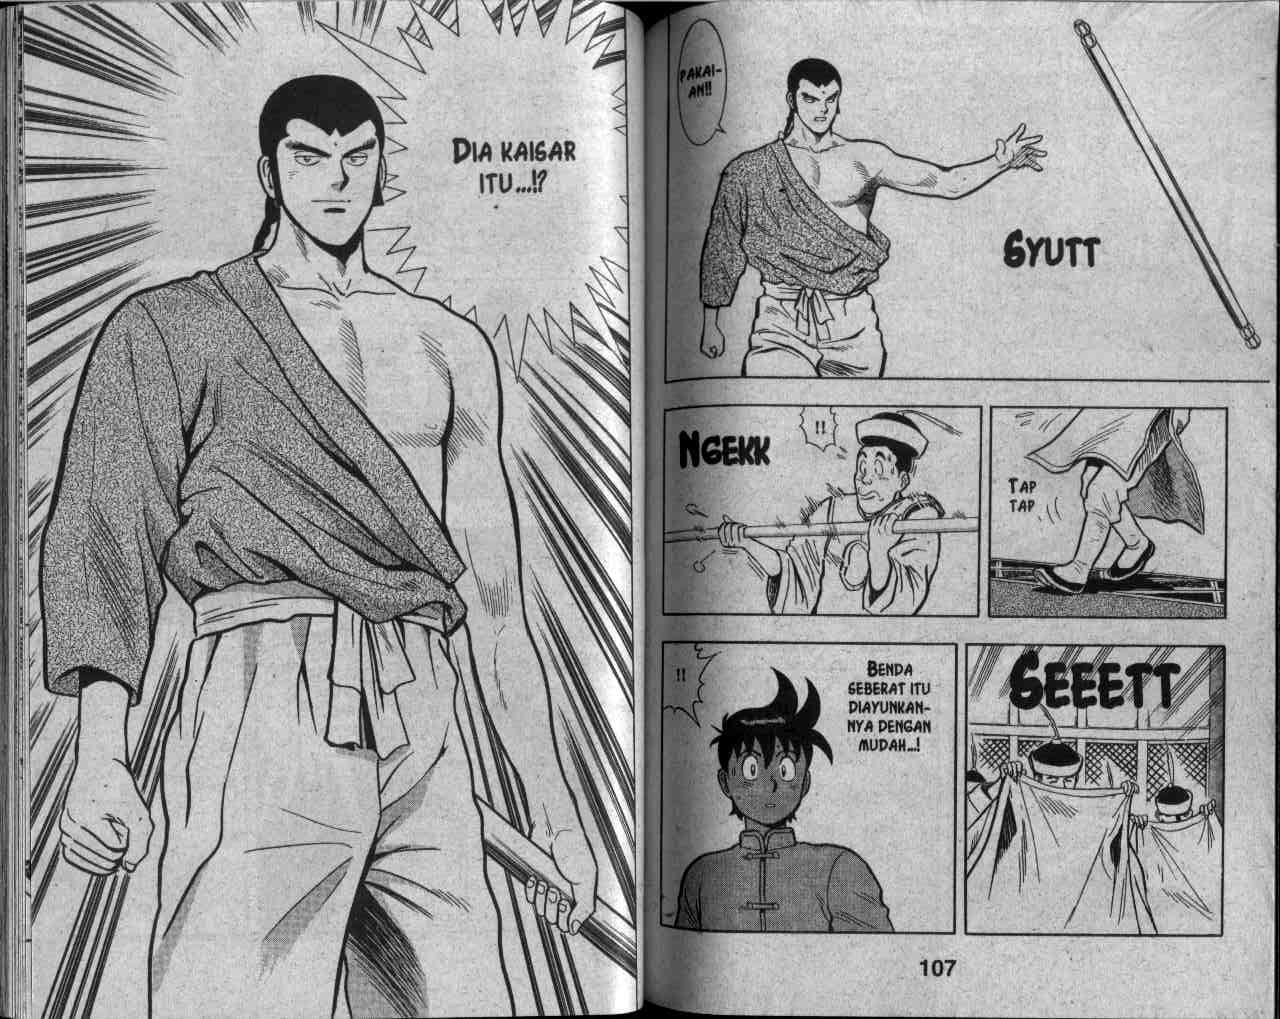 Kungfu Boy Chapter 29